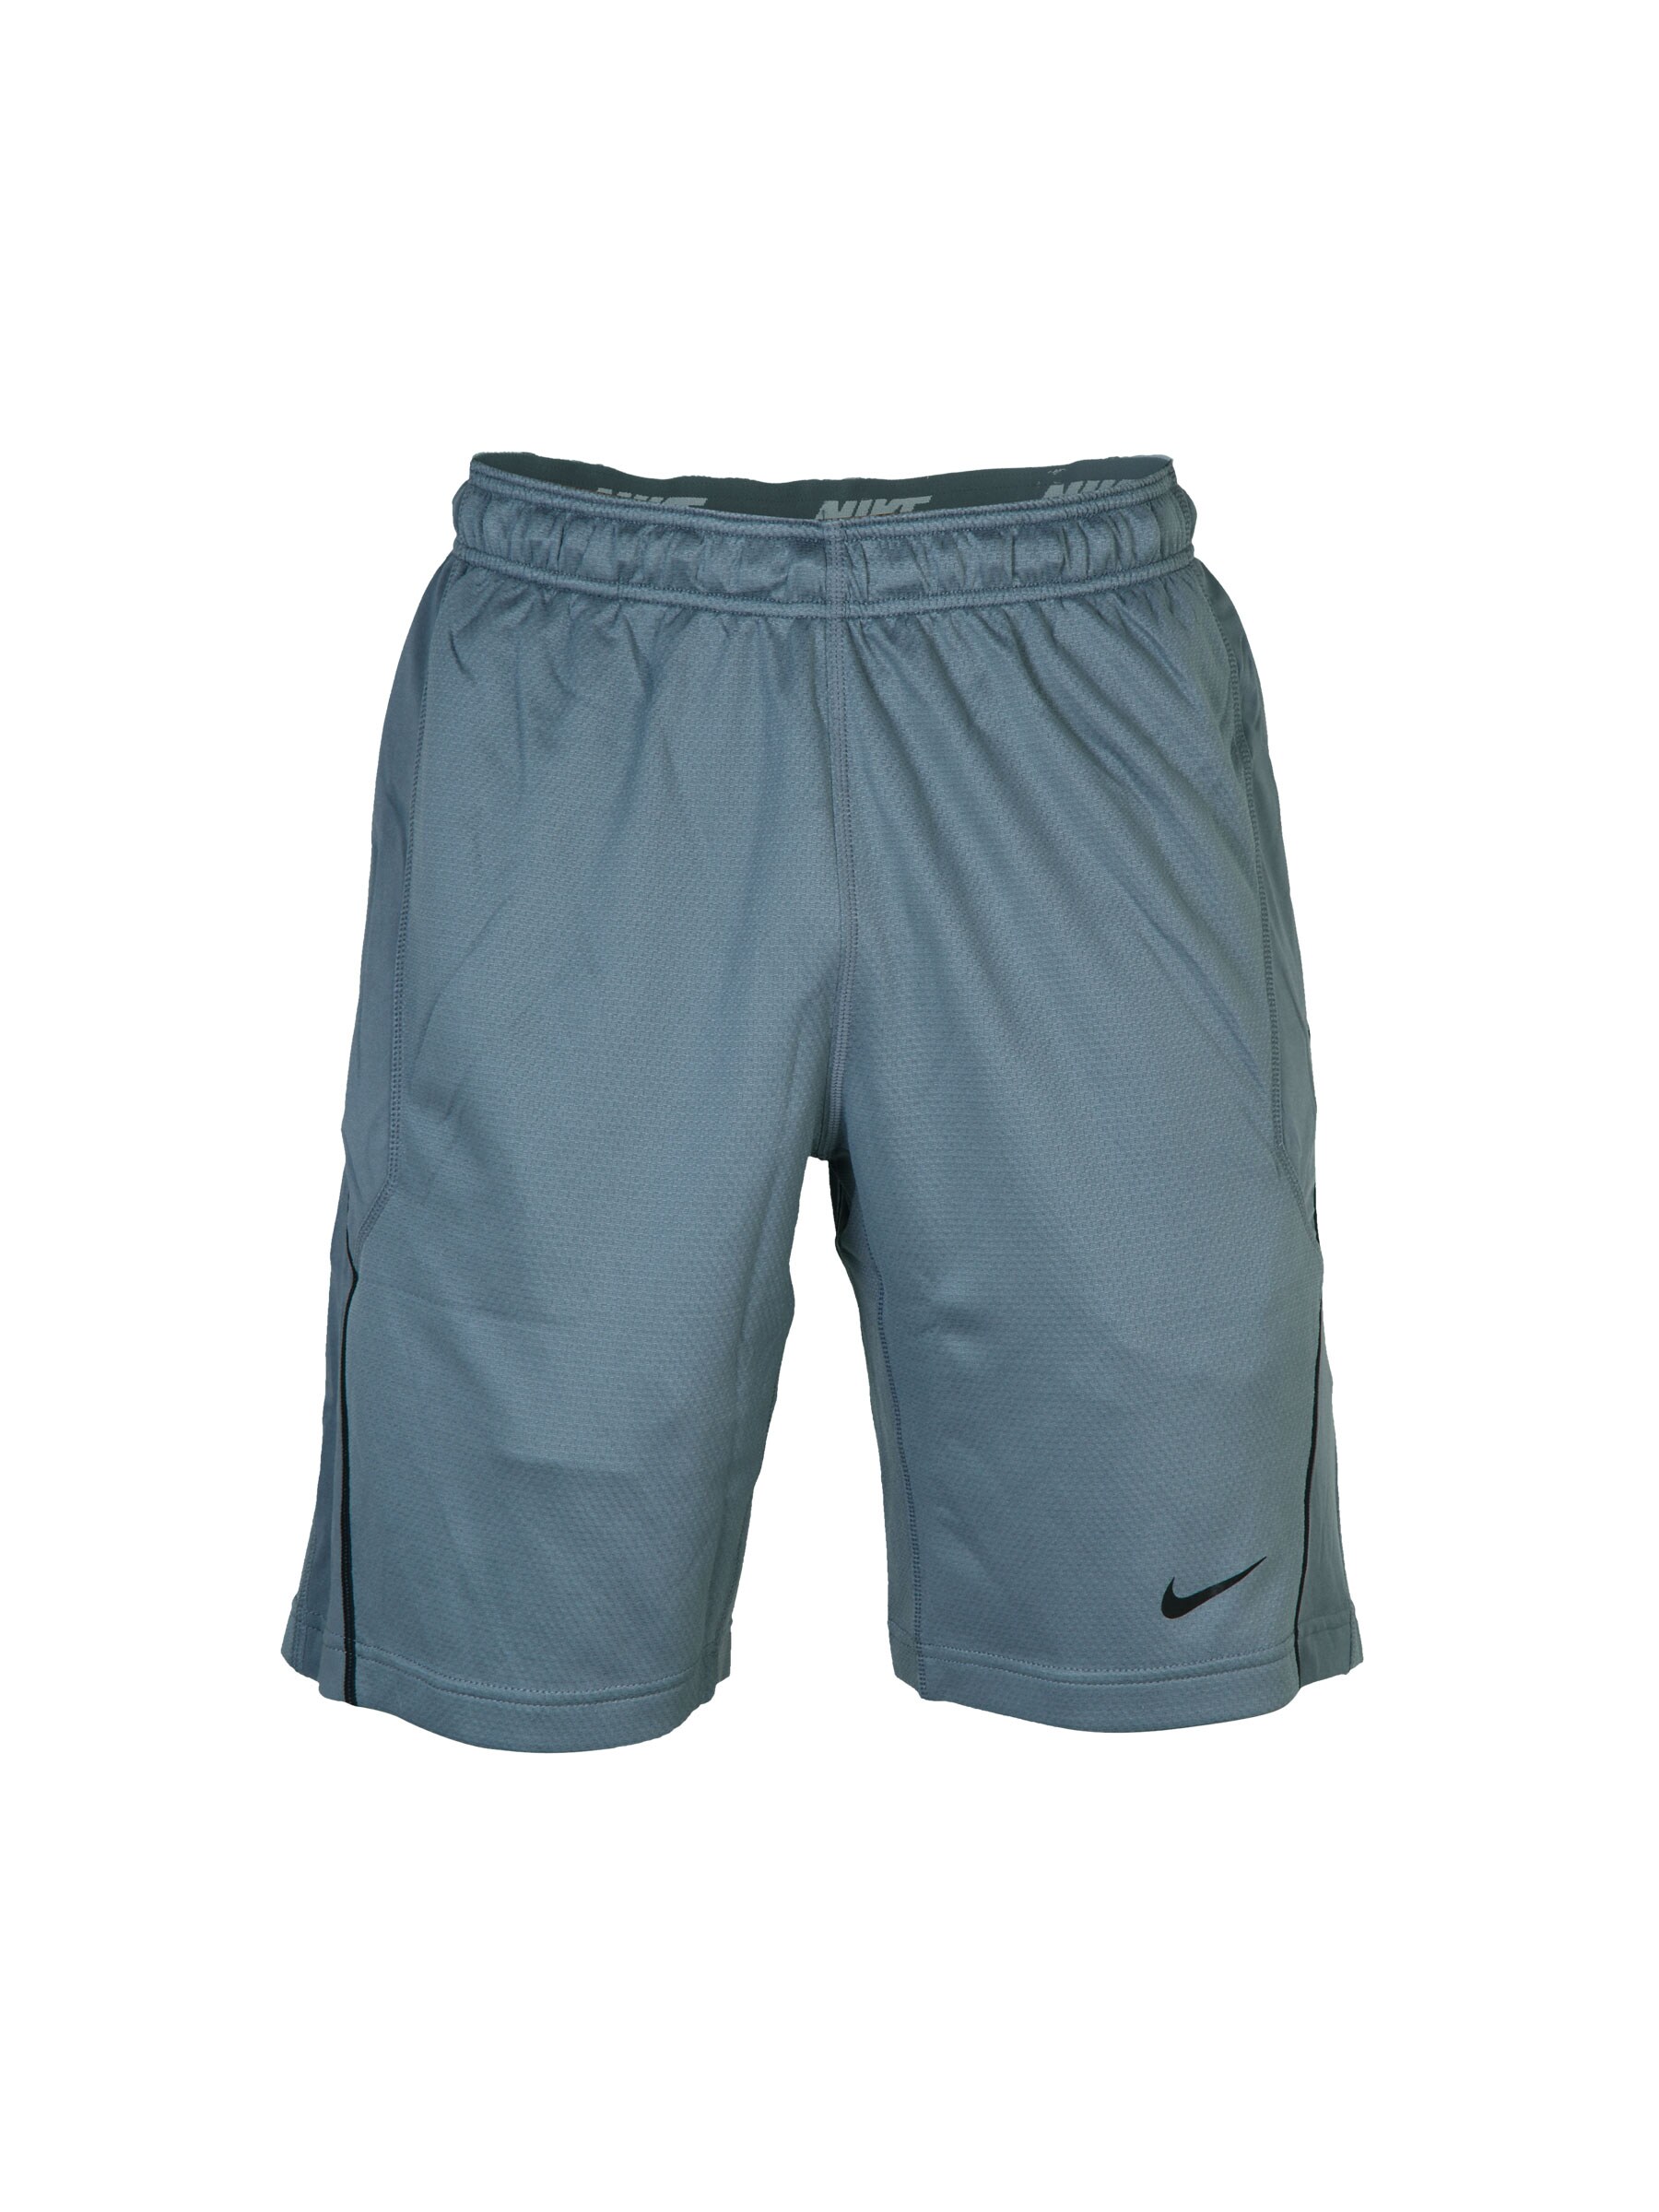 Nike Men's Vapor Knit Grey Short